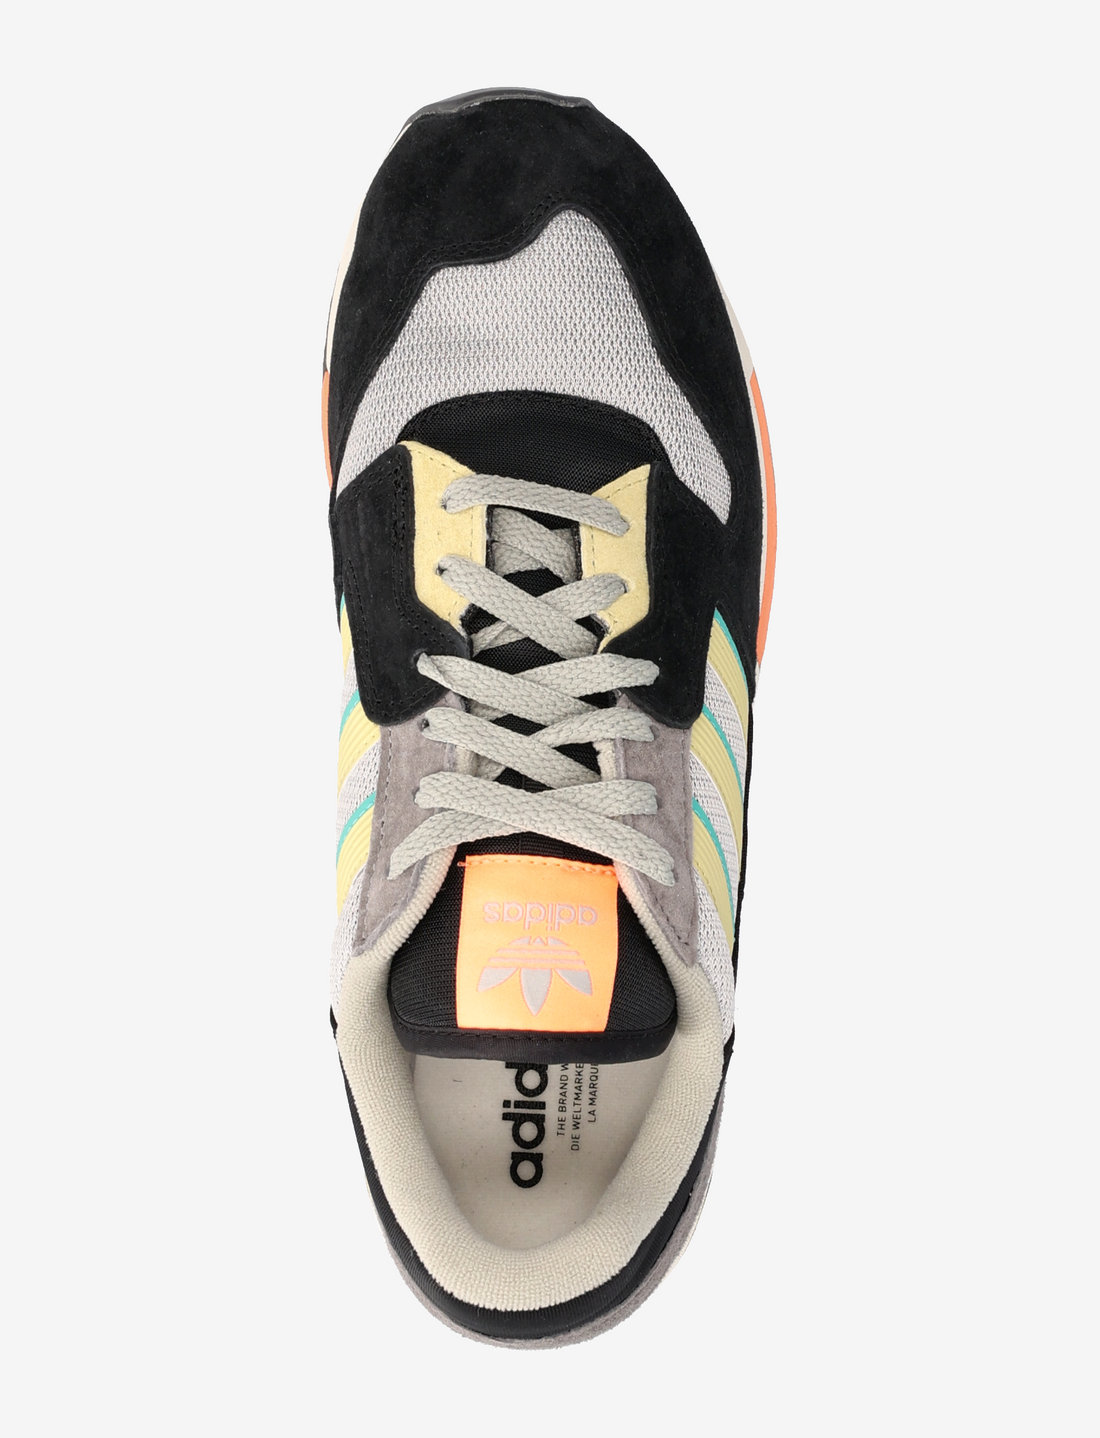 adidas Originals Zx 420 Shoes - Low top sneakers